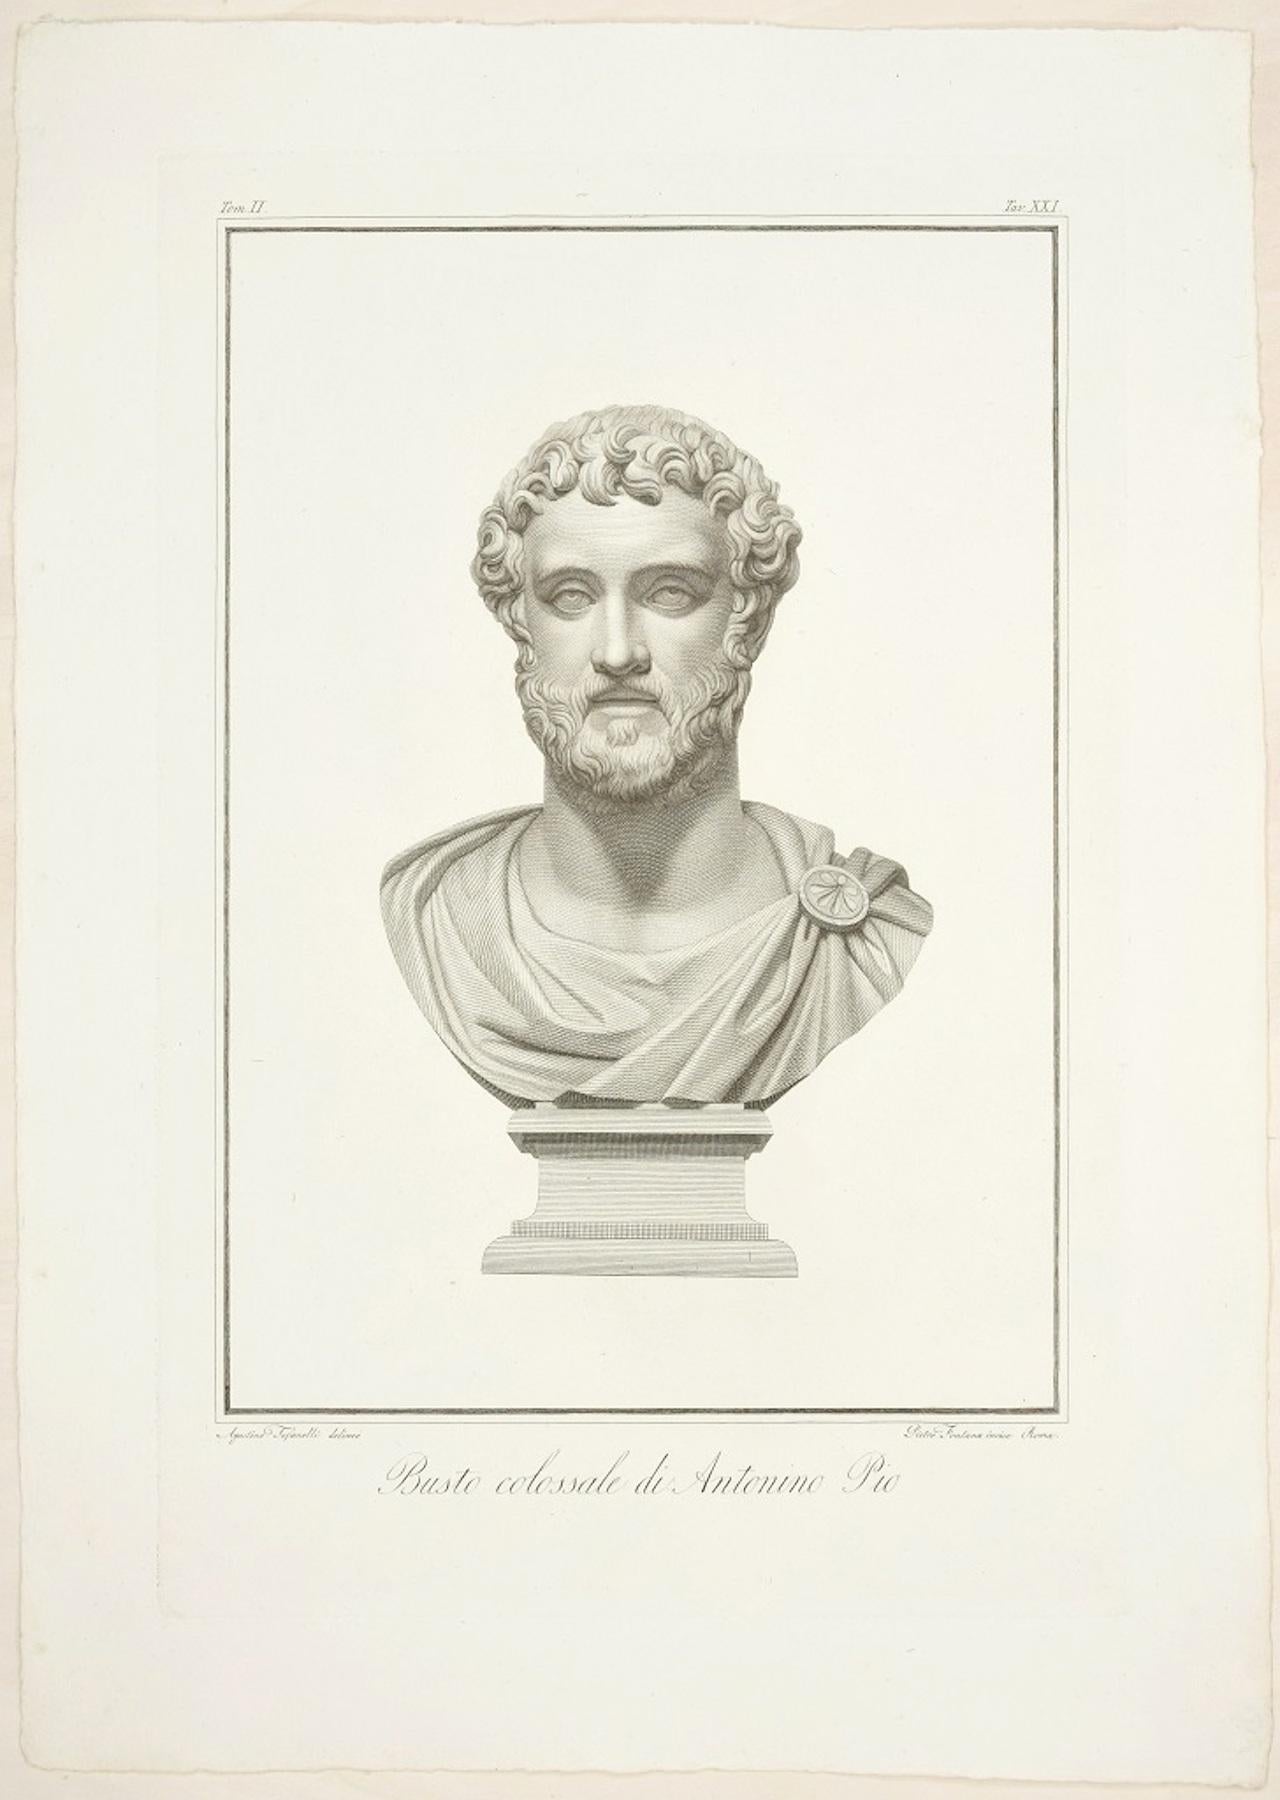 Pietro Fontana Portrait Print - Bust of Antoninus Pius - Original Etching by P. Fontana After A. Tofanelli